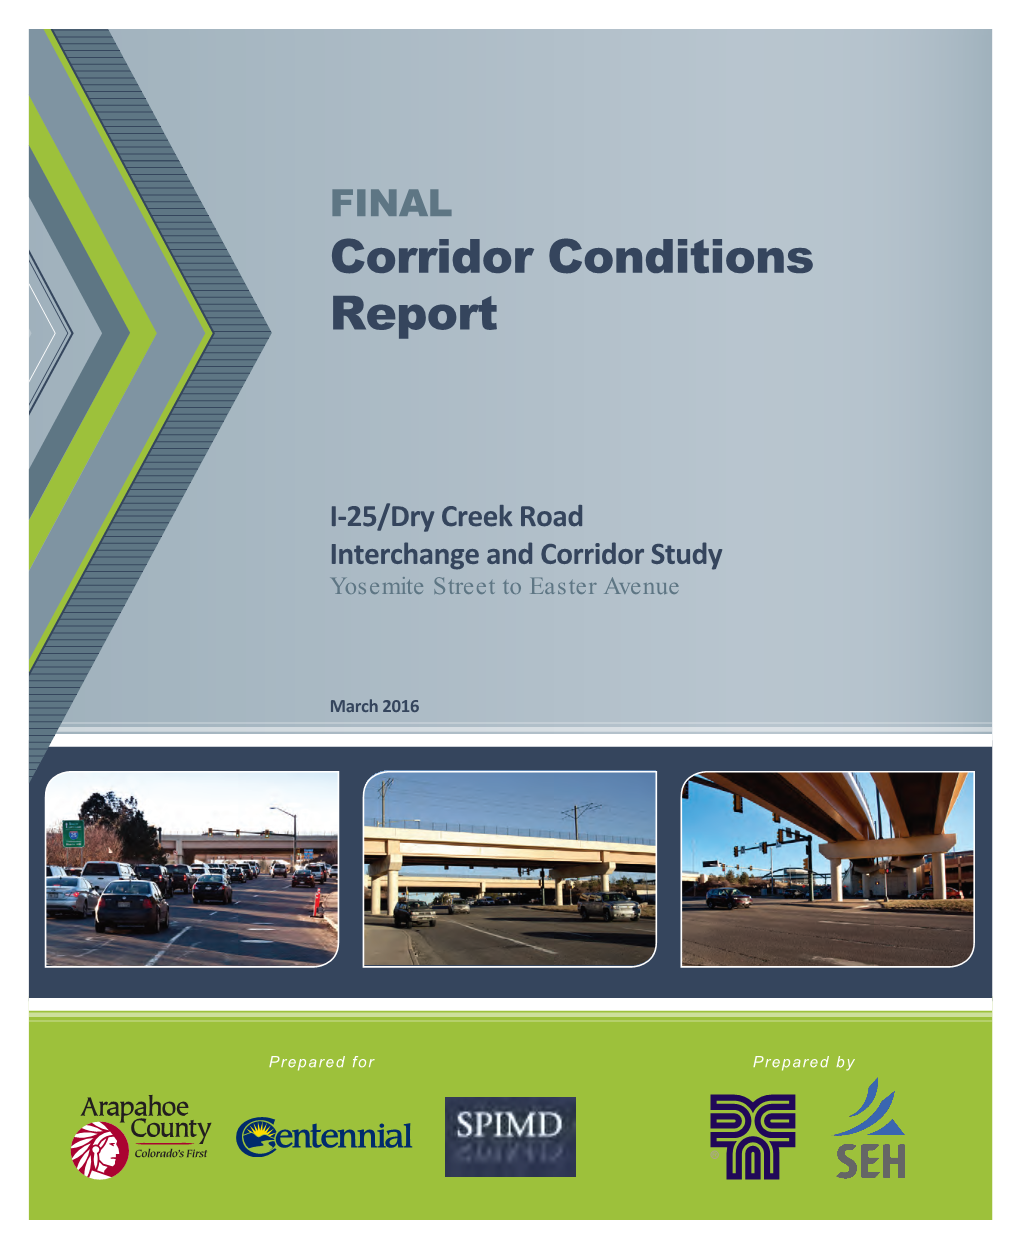 FINAL Corridor Conditions Report